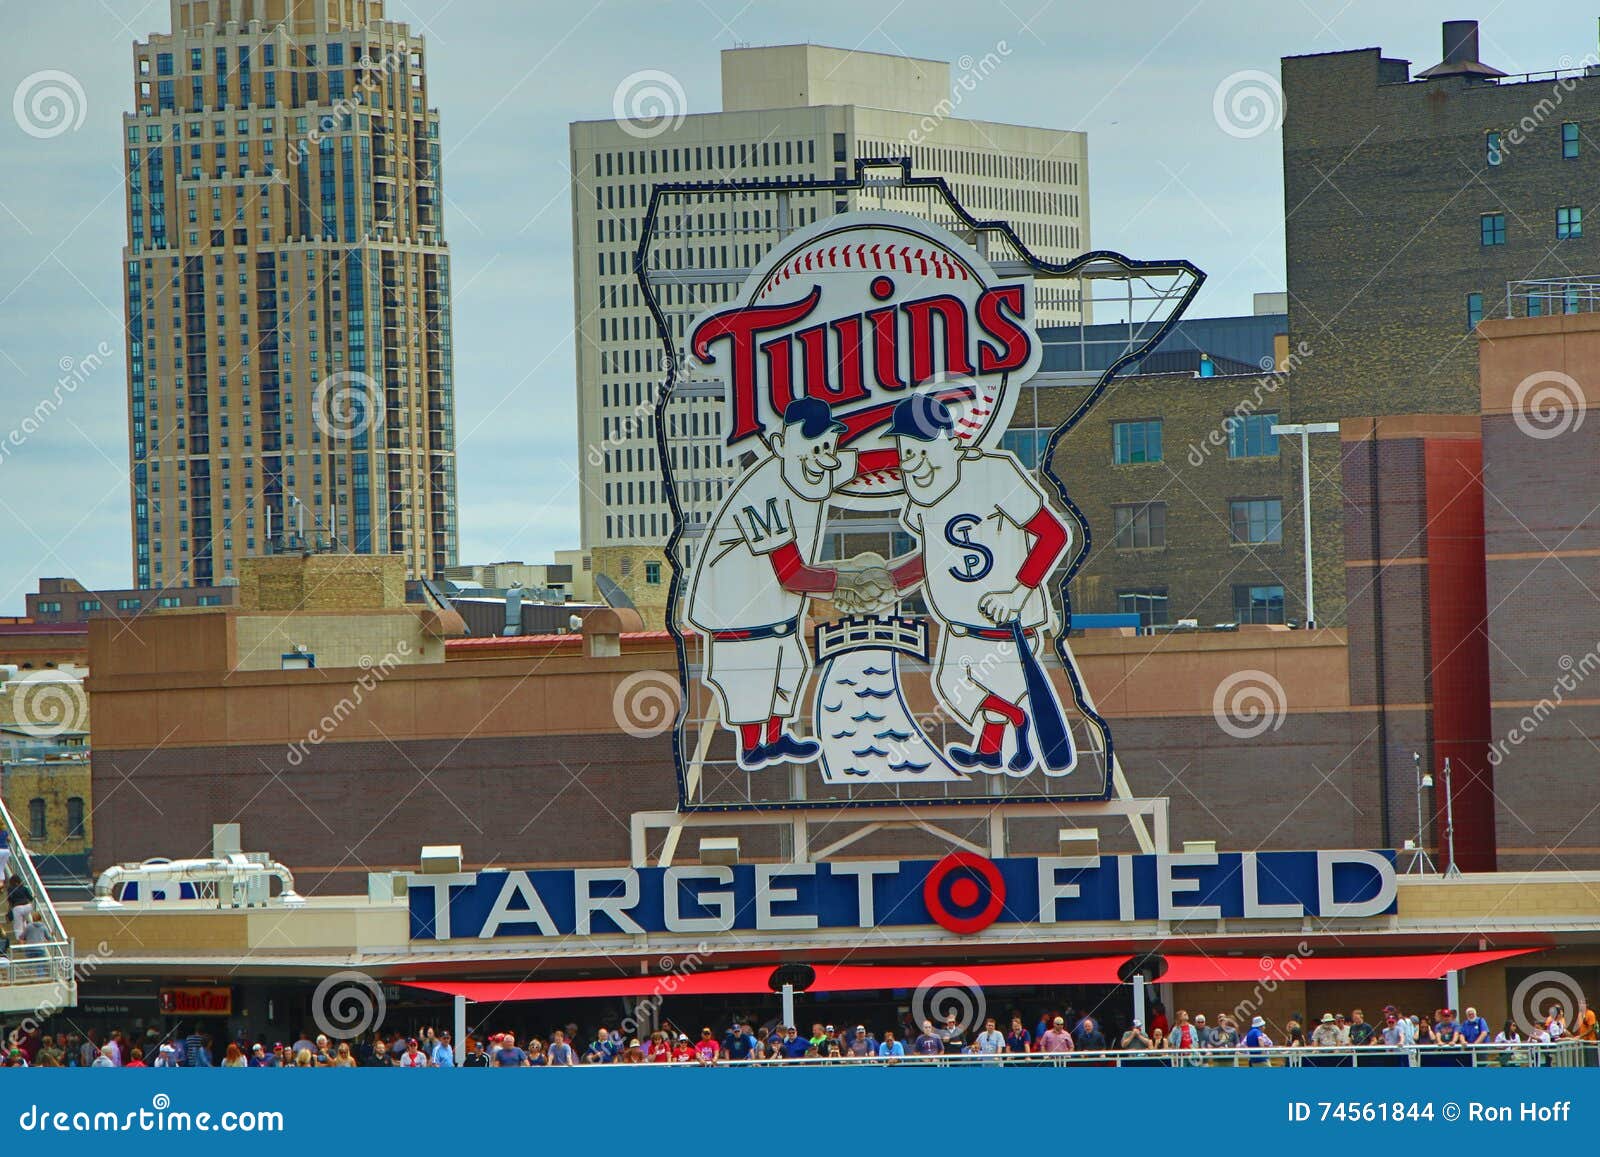 Target Center Stadium In Downtown Minneapolis Minnesota Stock Photo -  Download Image Now - iStock